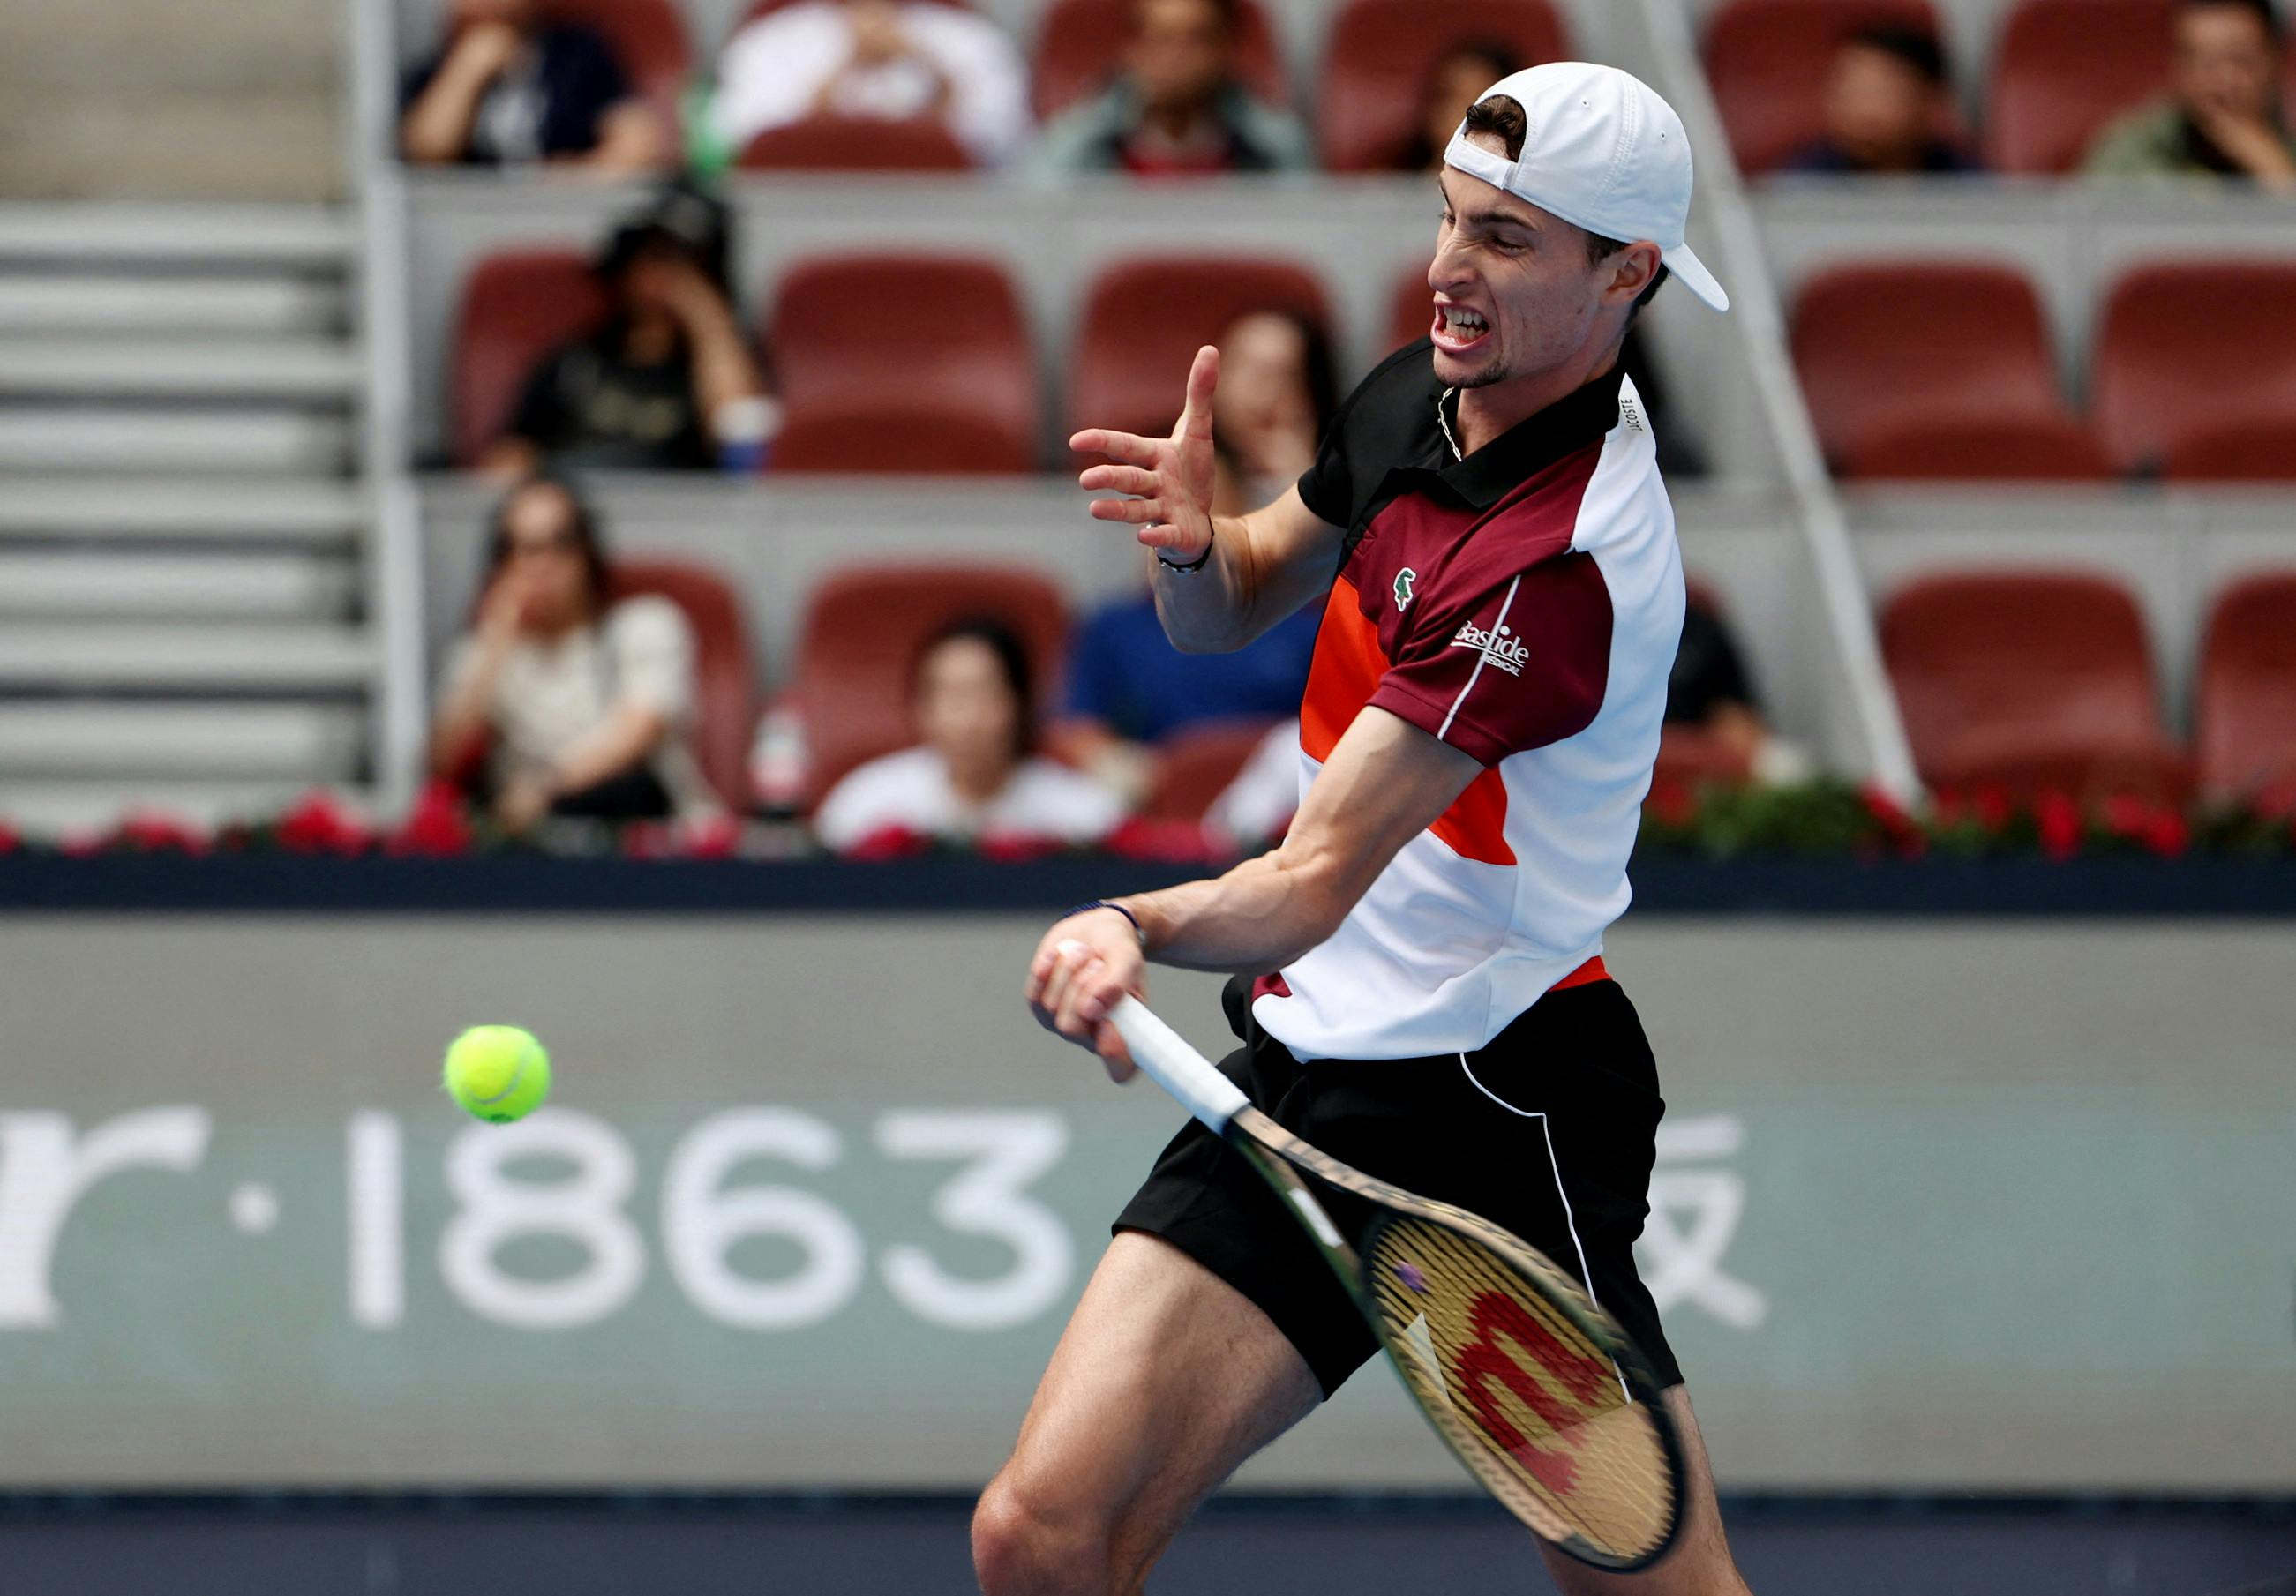 Tennis-Medvedev books China Open semi-final with familiar foe Zverev SaltWire